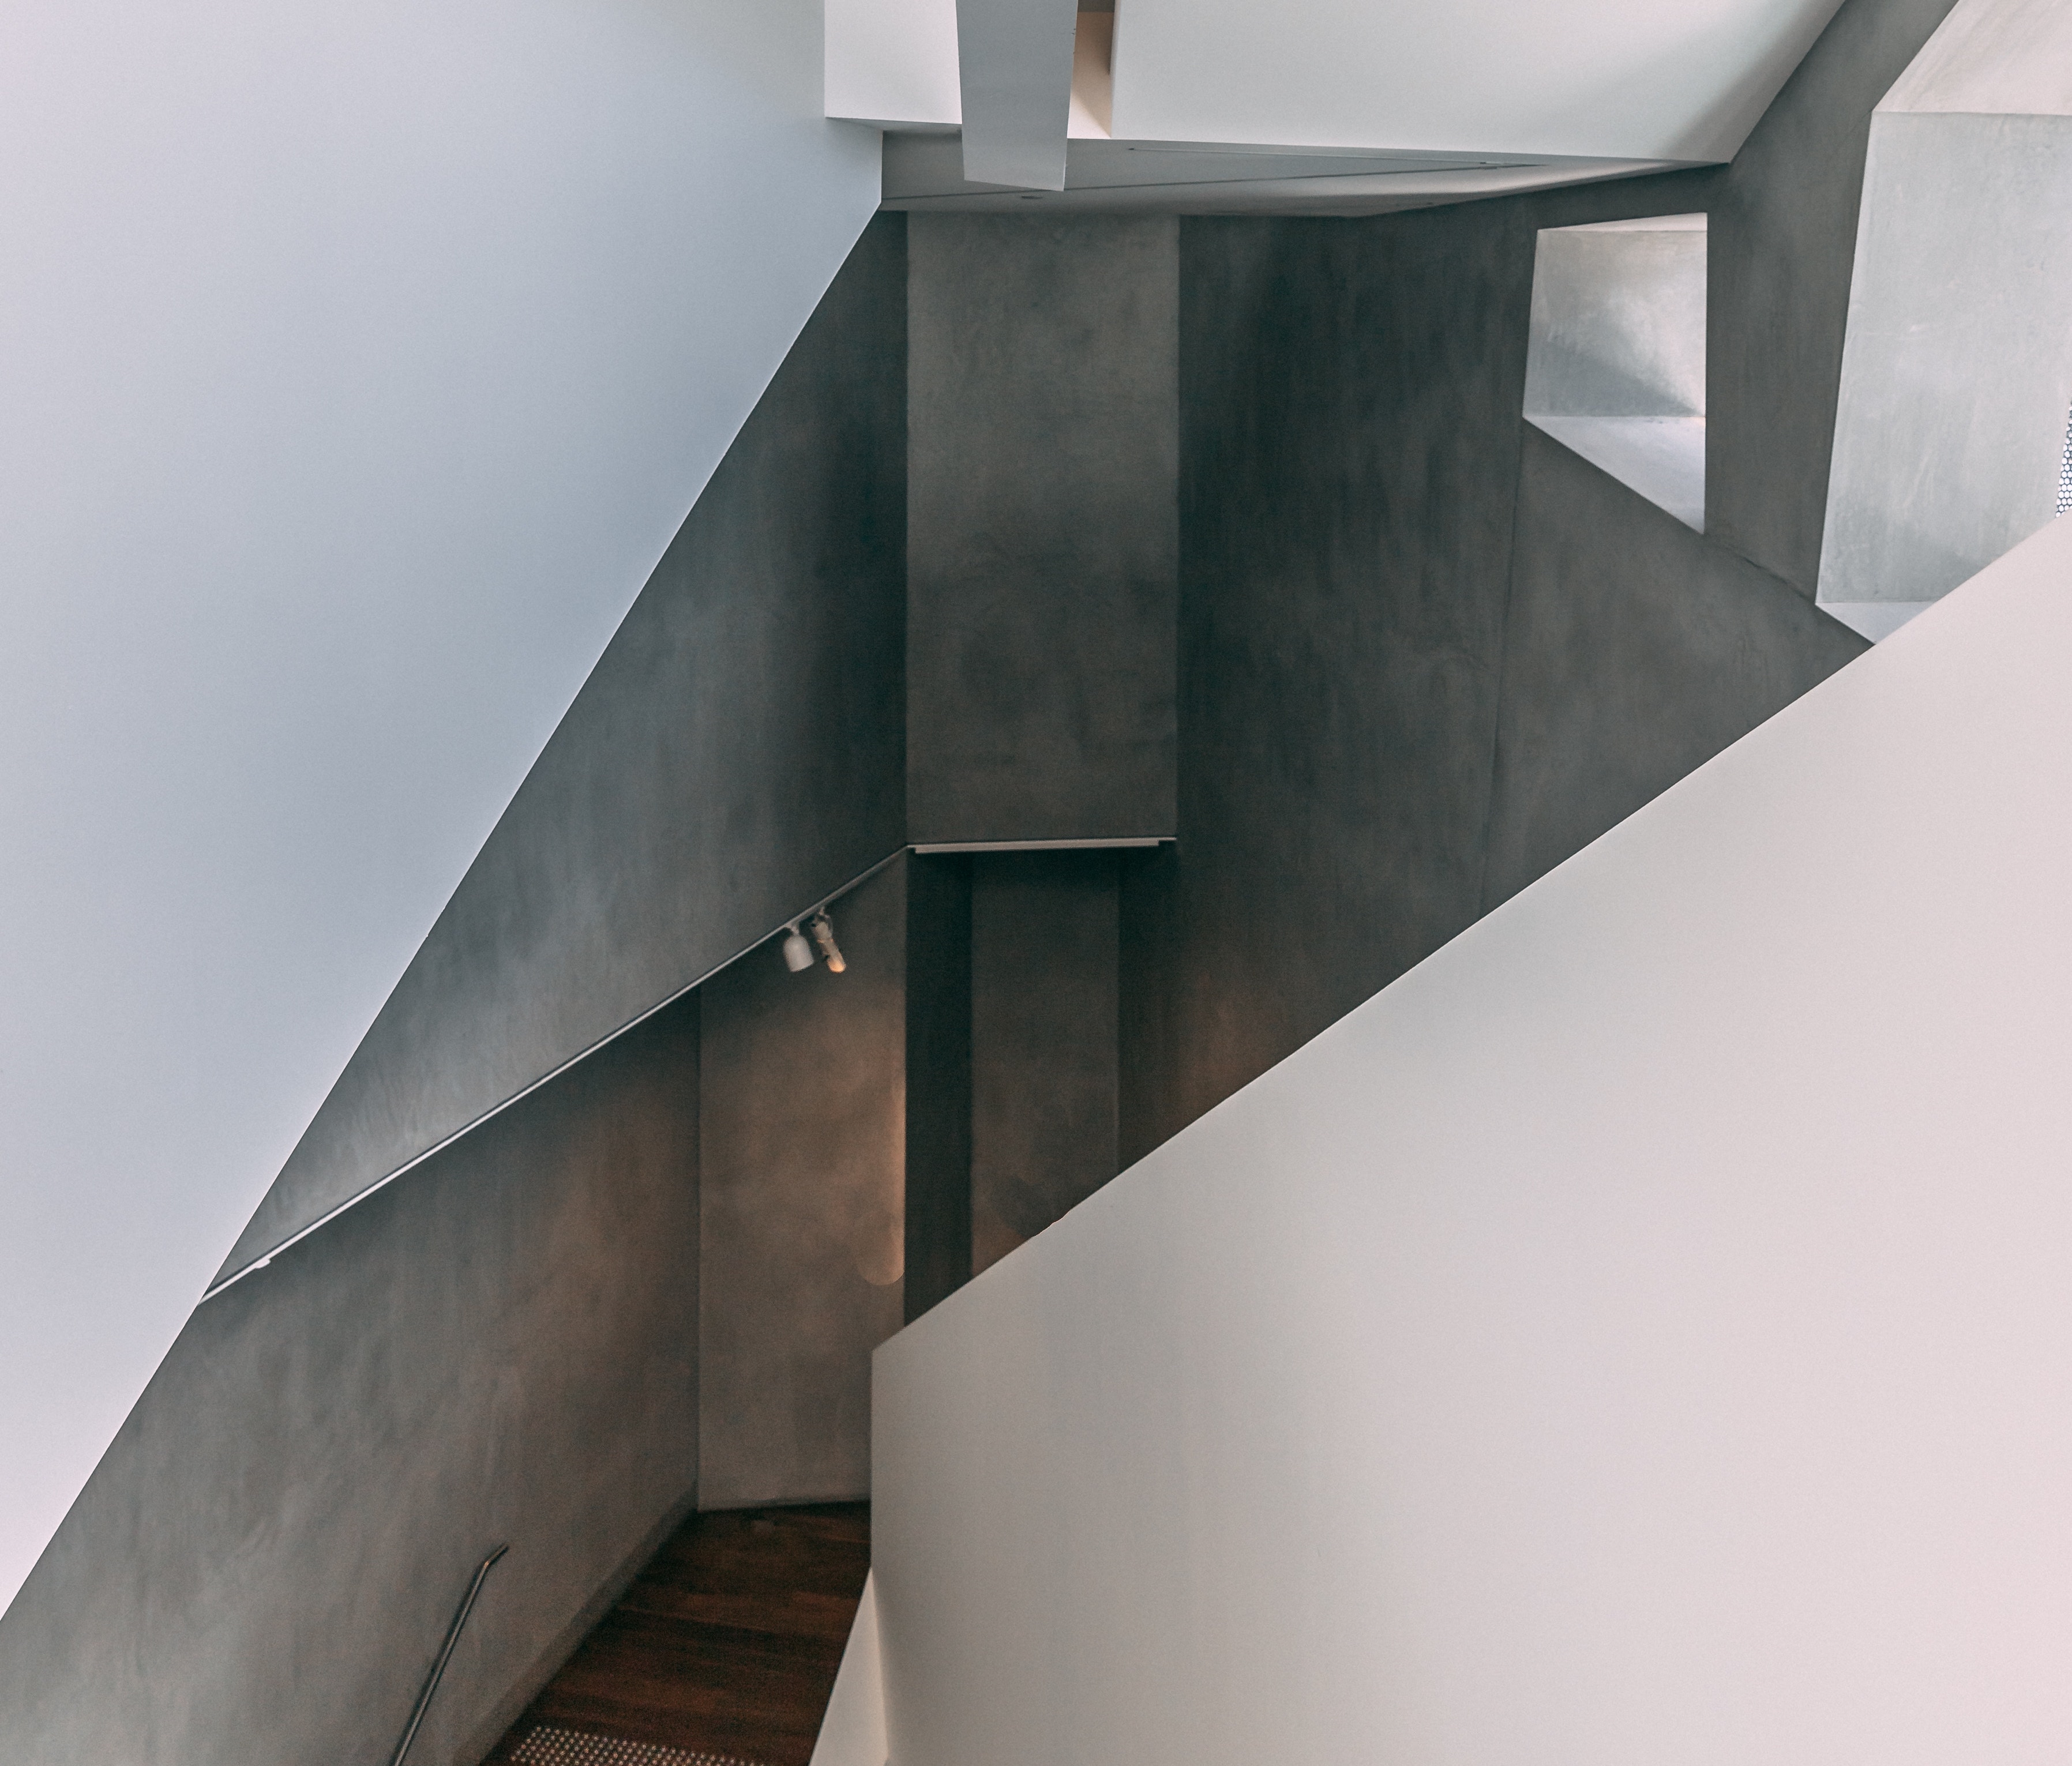 Concrete home interior | Photo: Unsplash/Kevin Xue